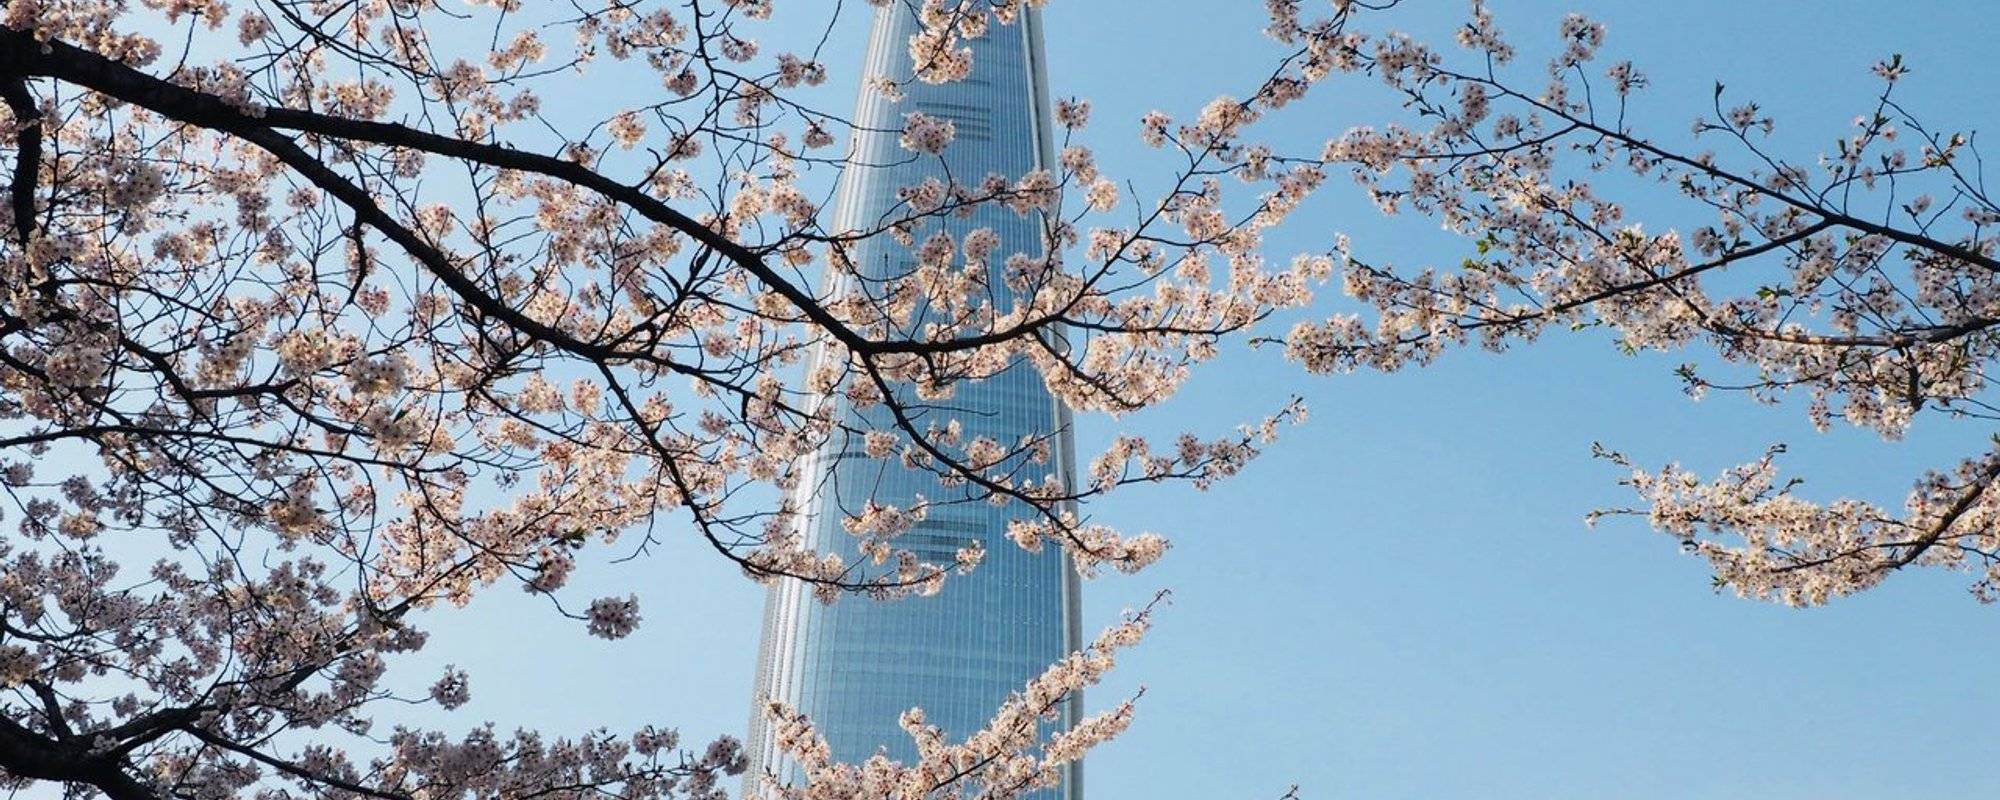 Cherry Blossom trip in Seoul